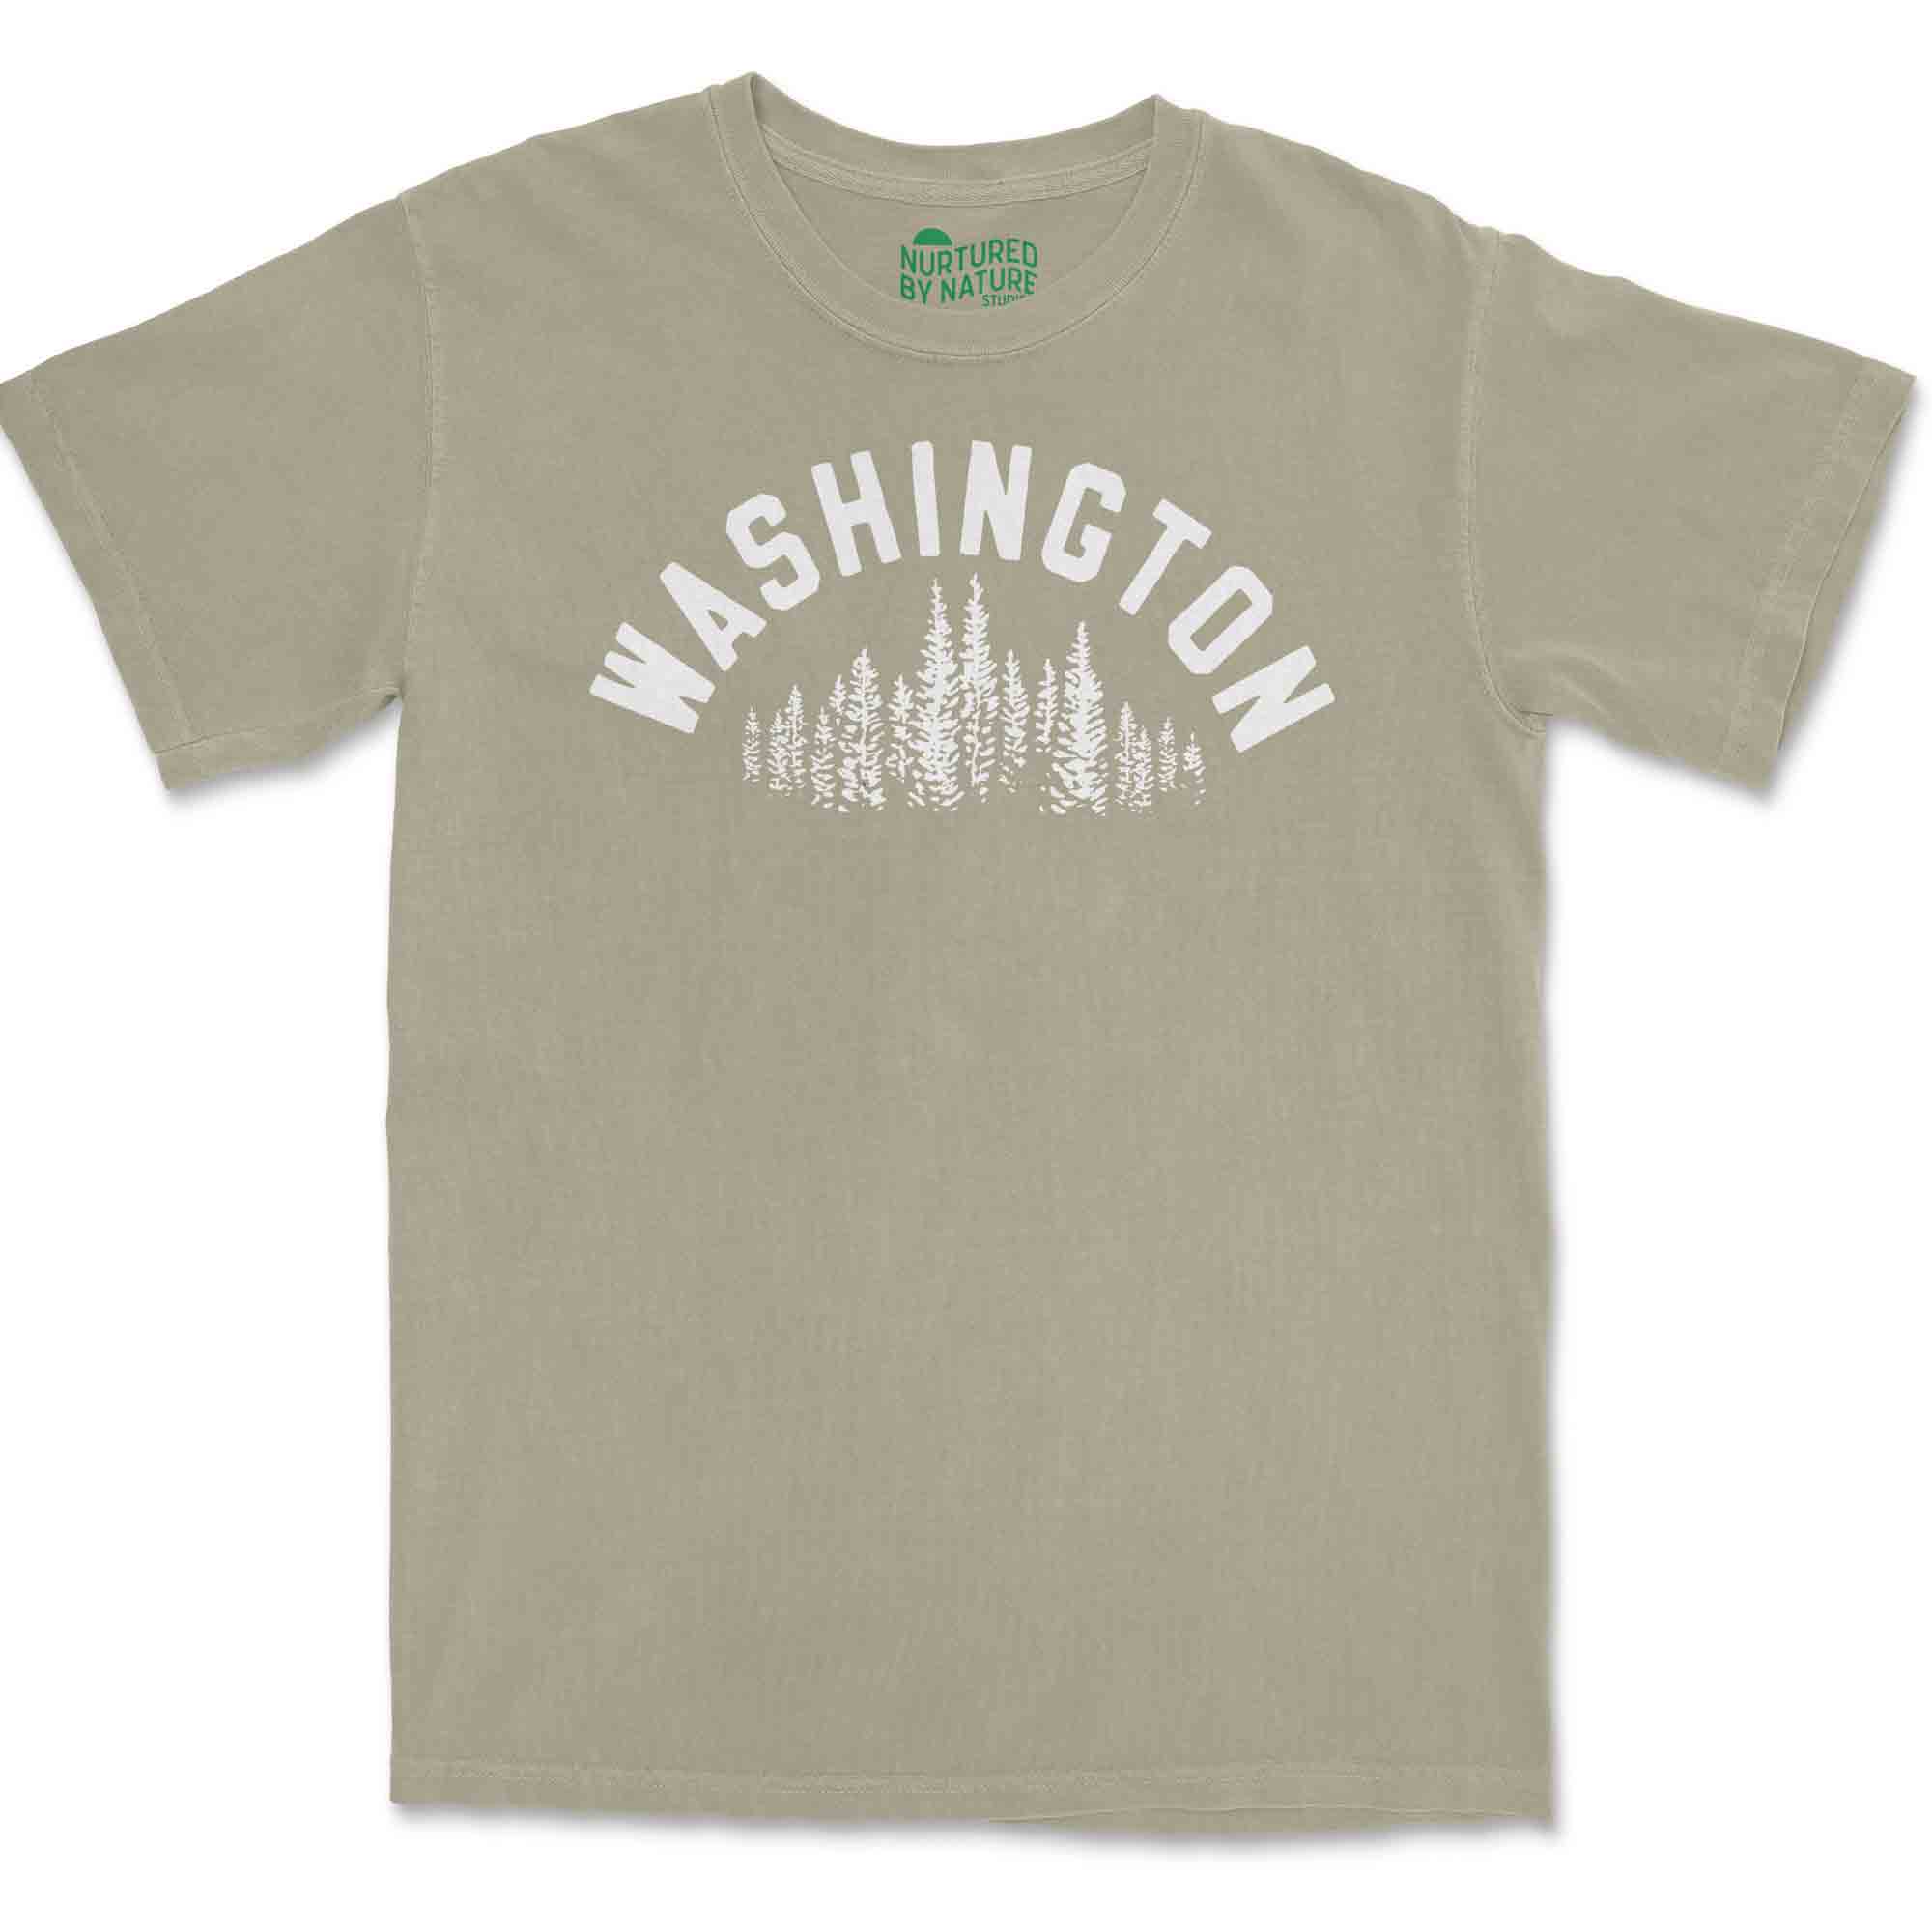 Washington State Treeline Retro T-Shirt